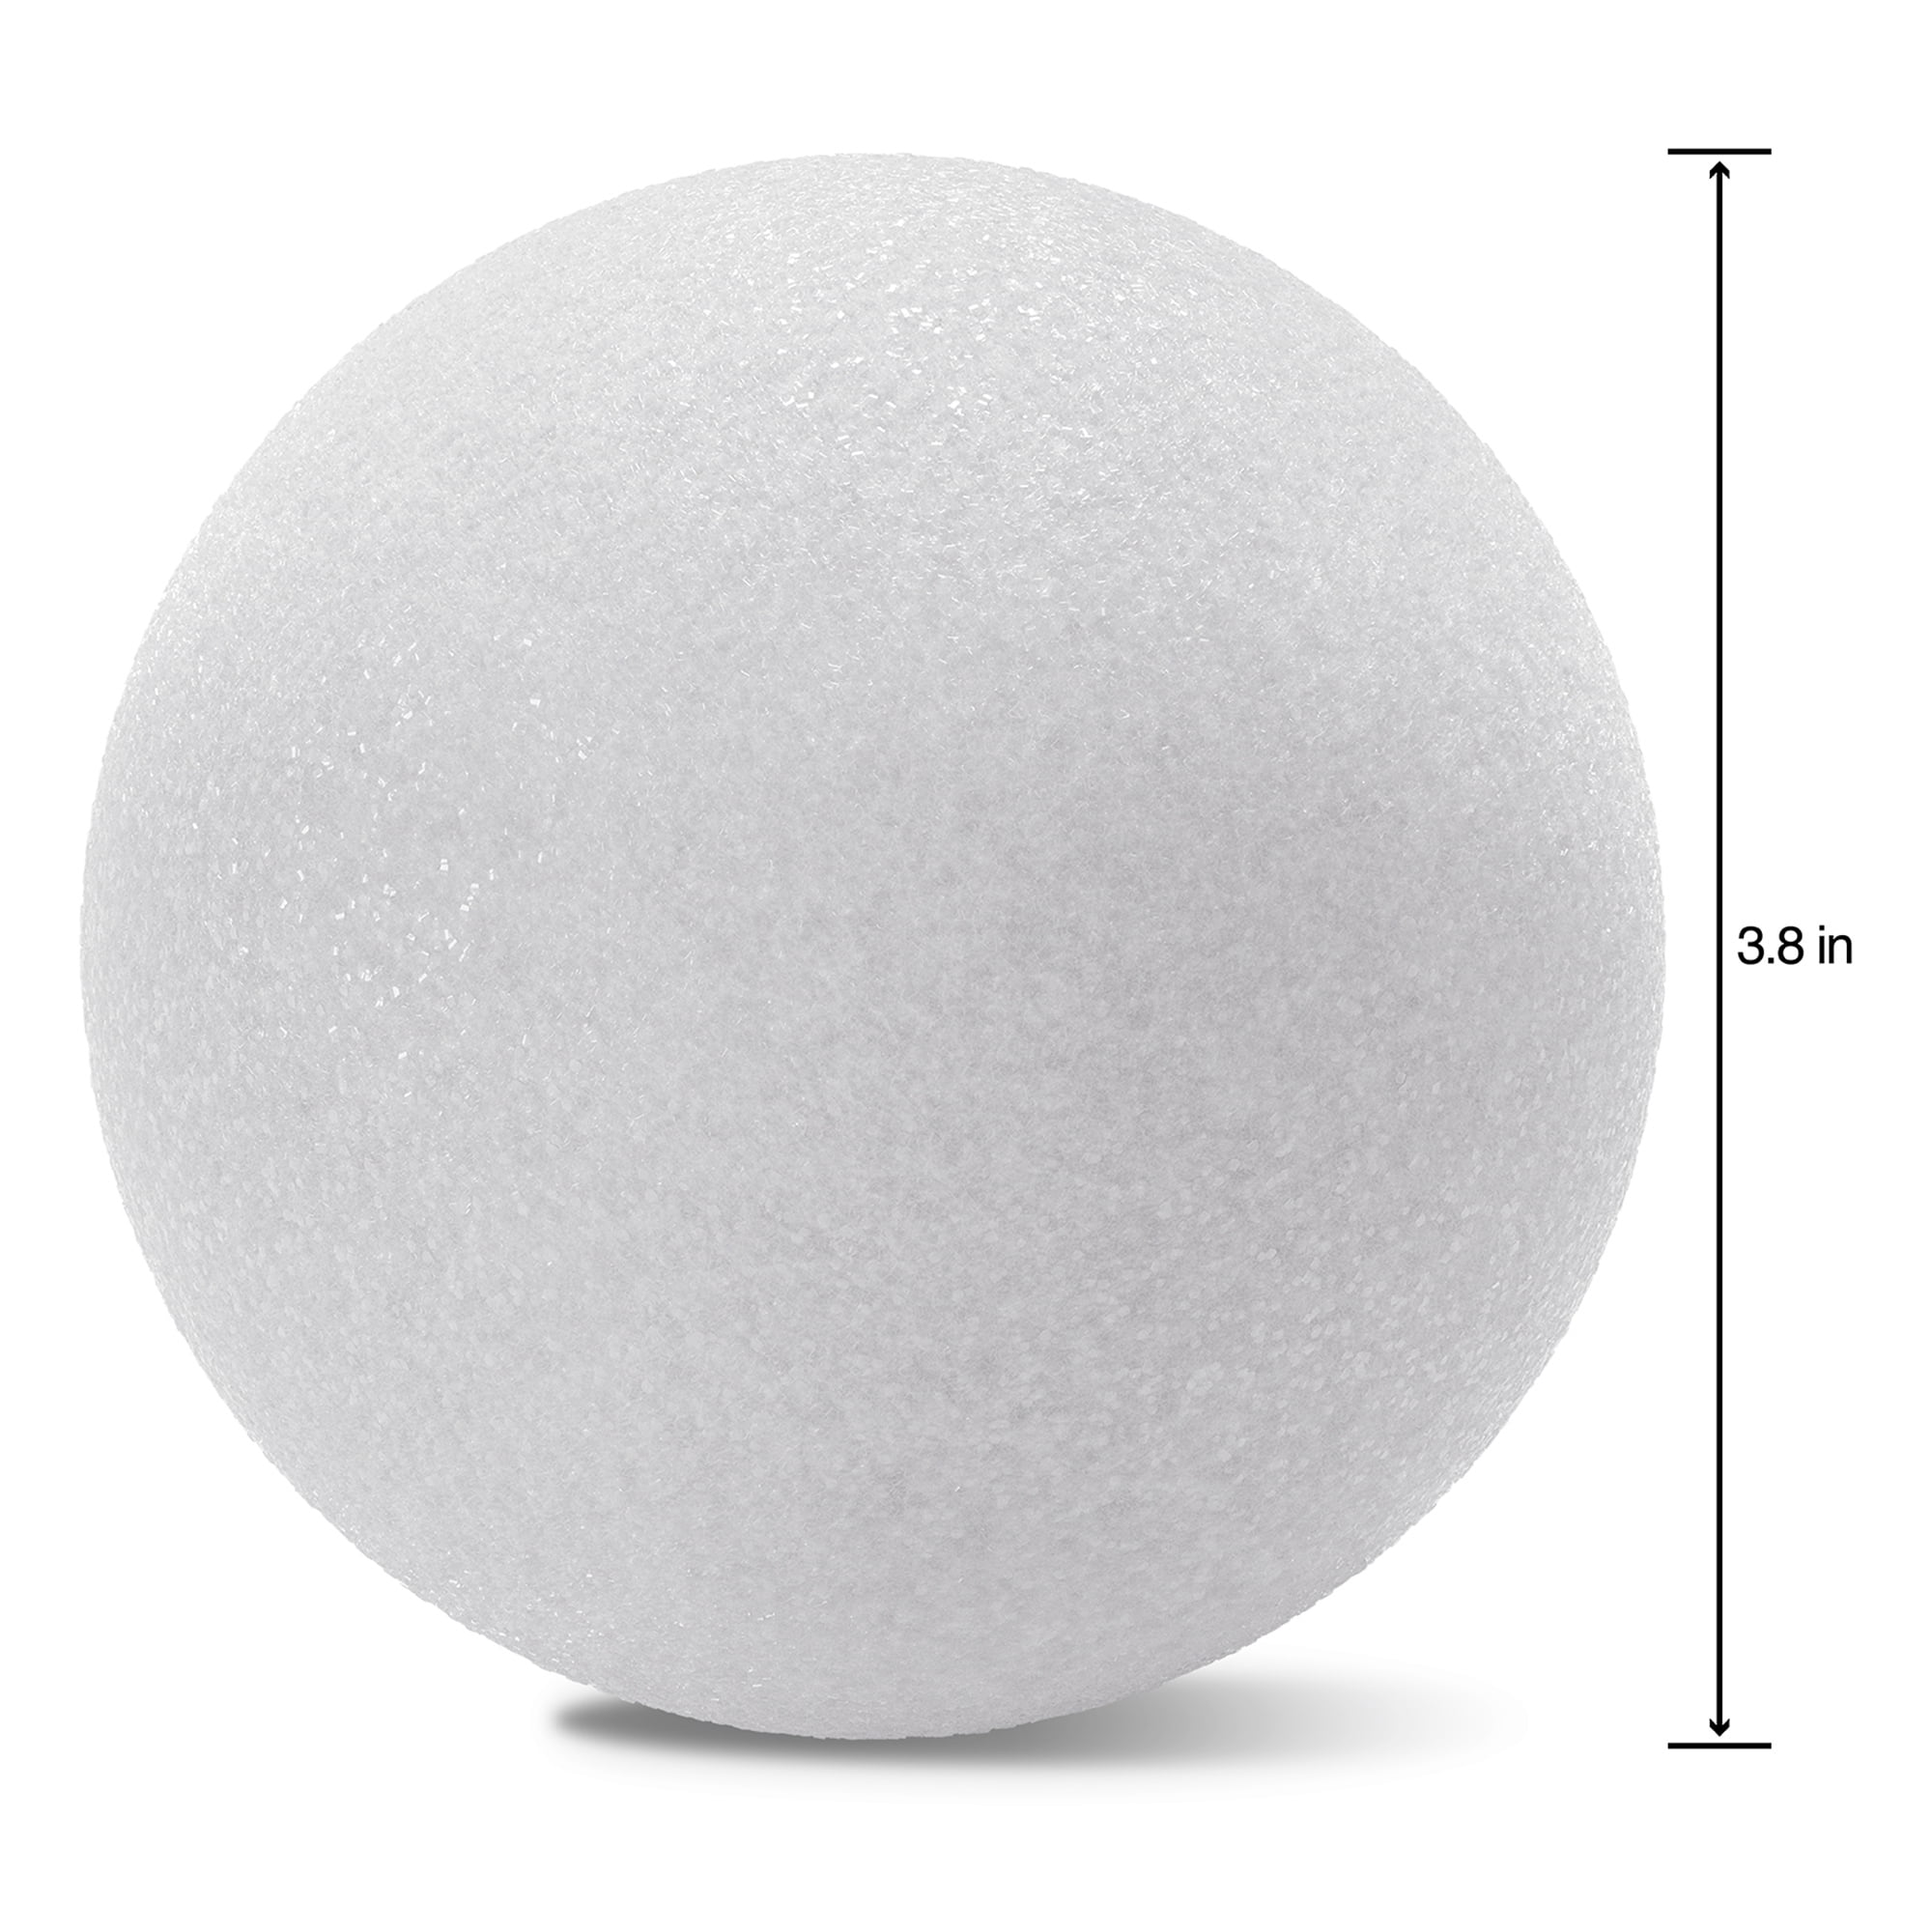  Styrofoam Balls 8 Inch,2PC Large White Foam Balls